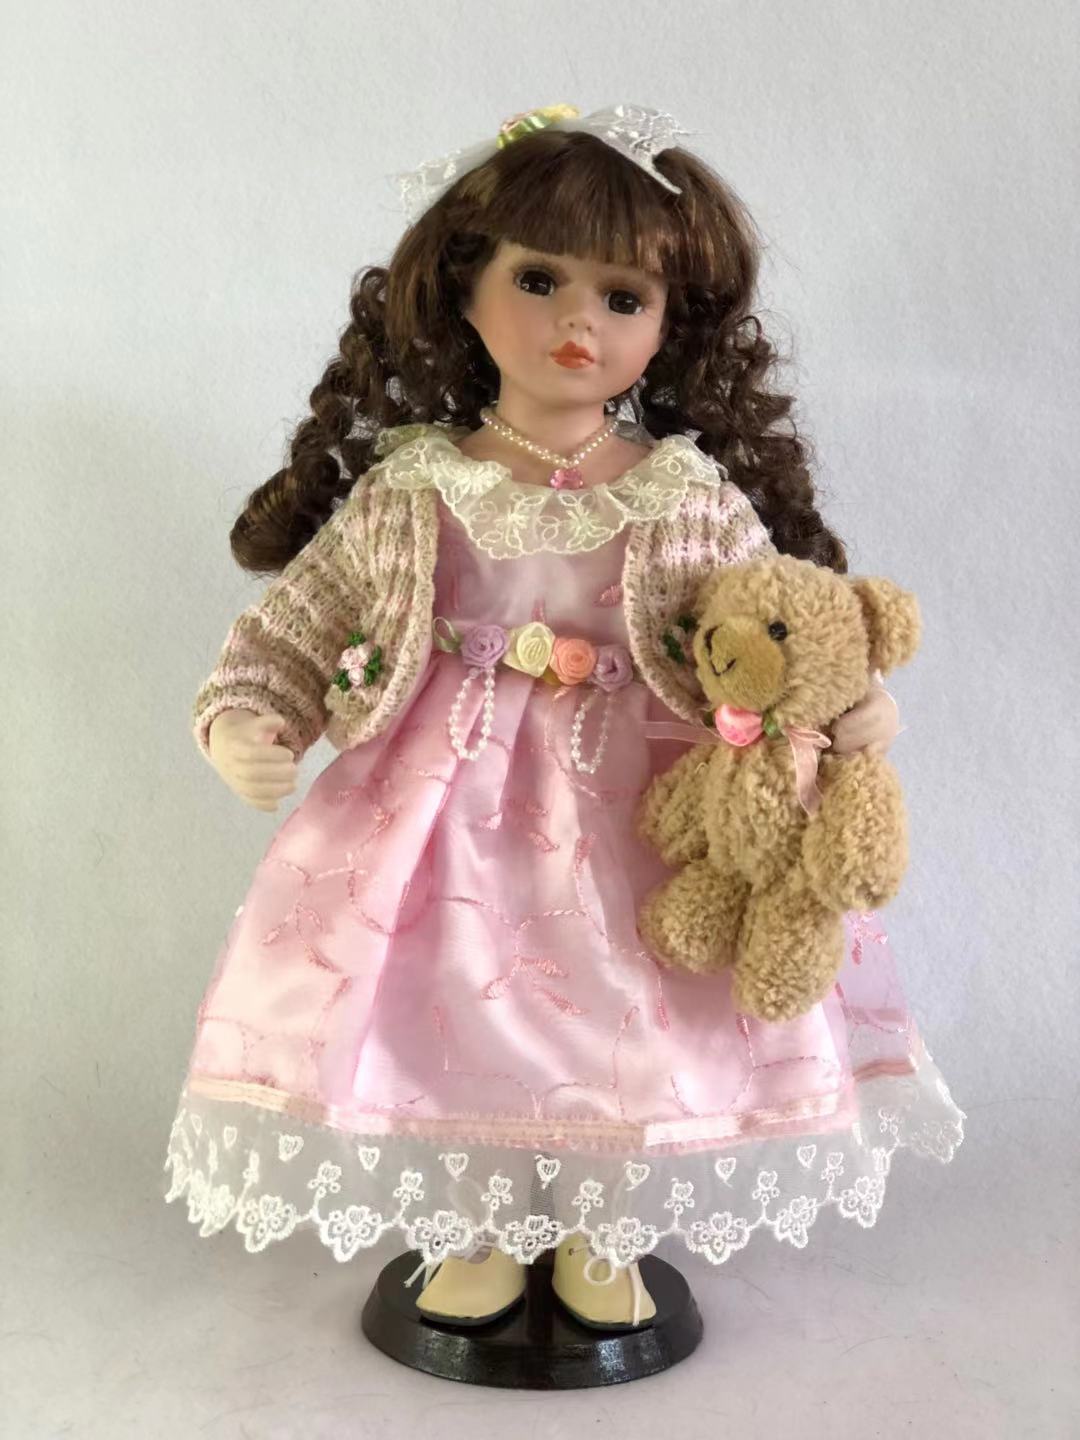 Jmisa 14" Porcelain Doll Pink Dress with Bear… - image 1 of 2